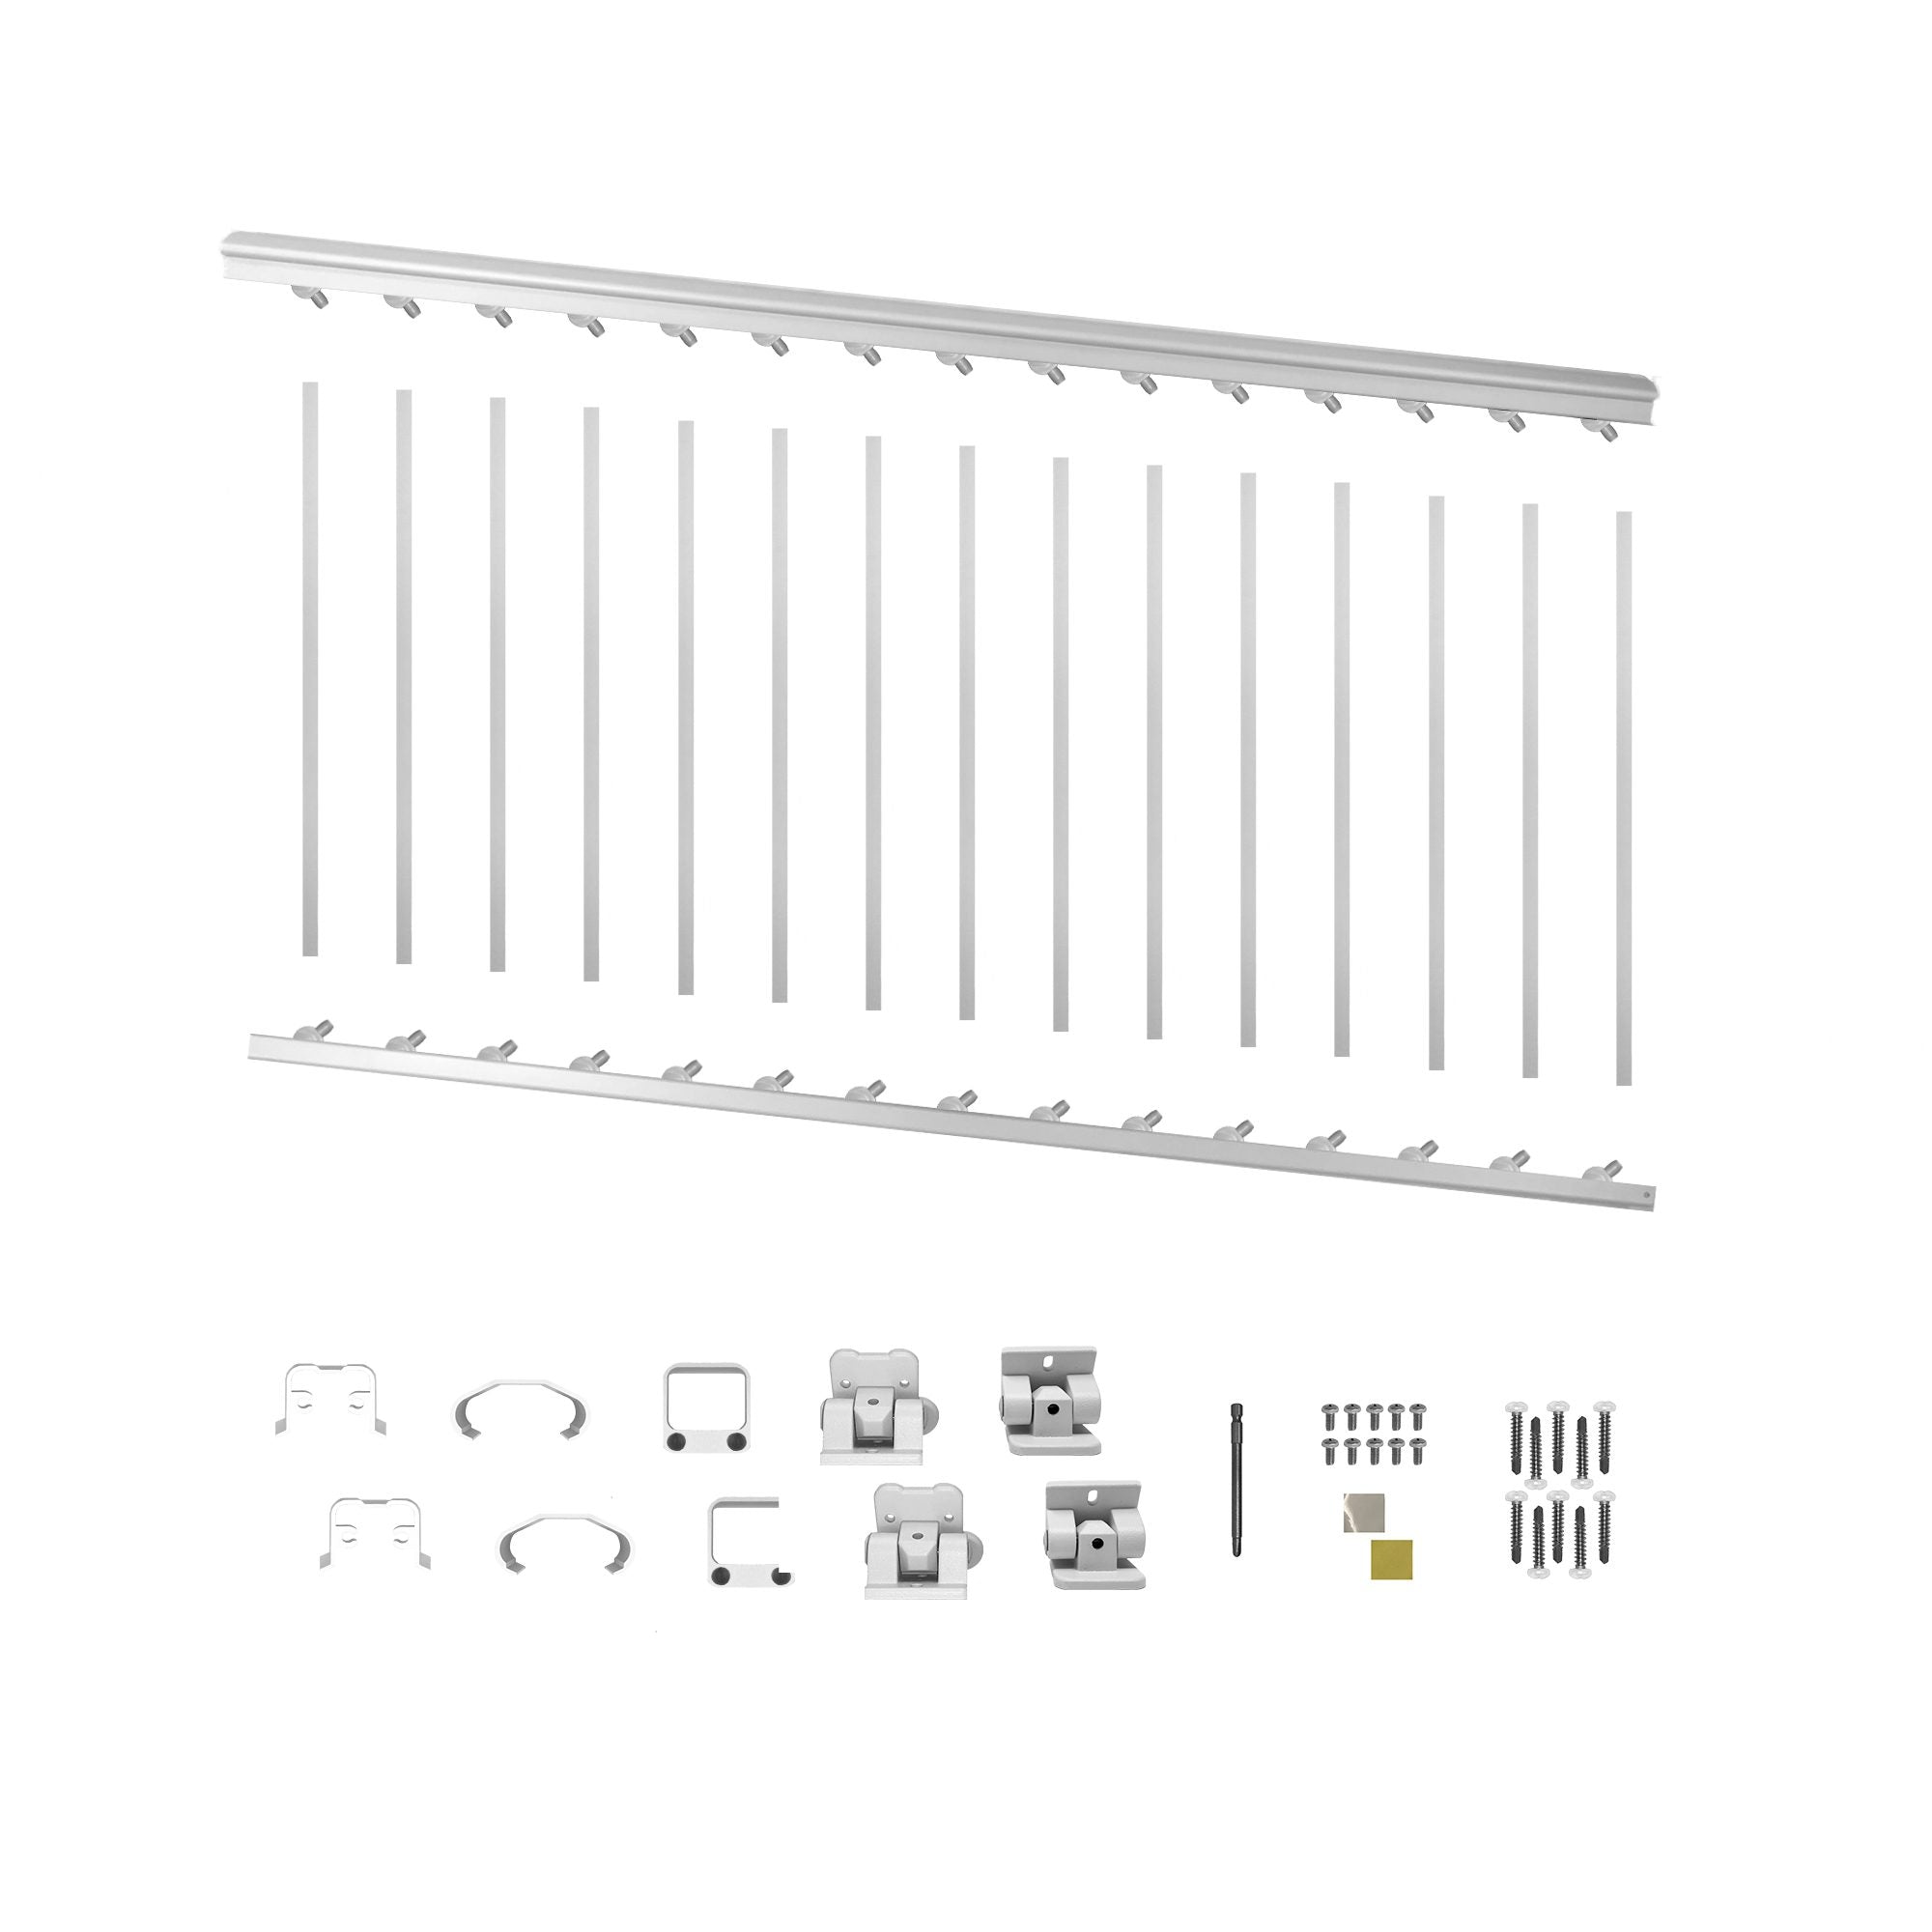 6′ Long x 36″ High White Aluminum Stair Railing Kit